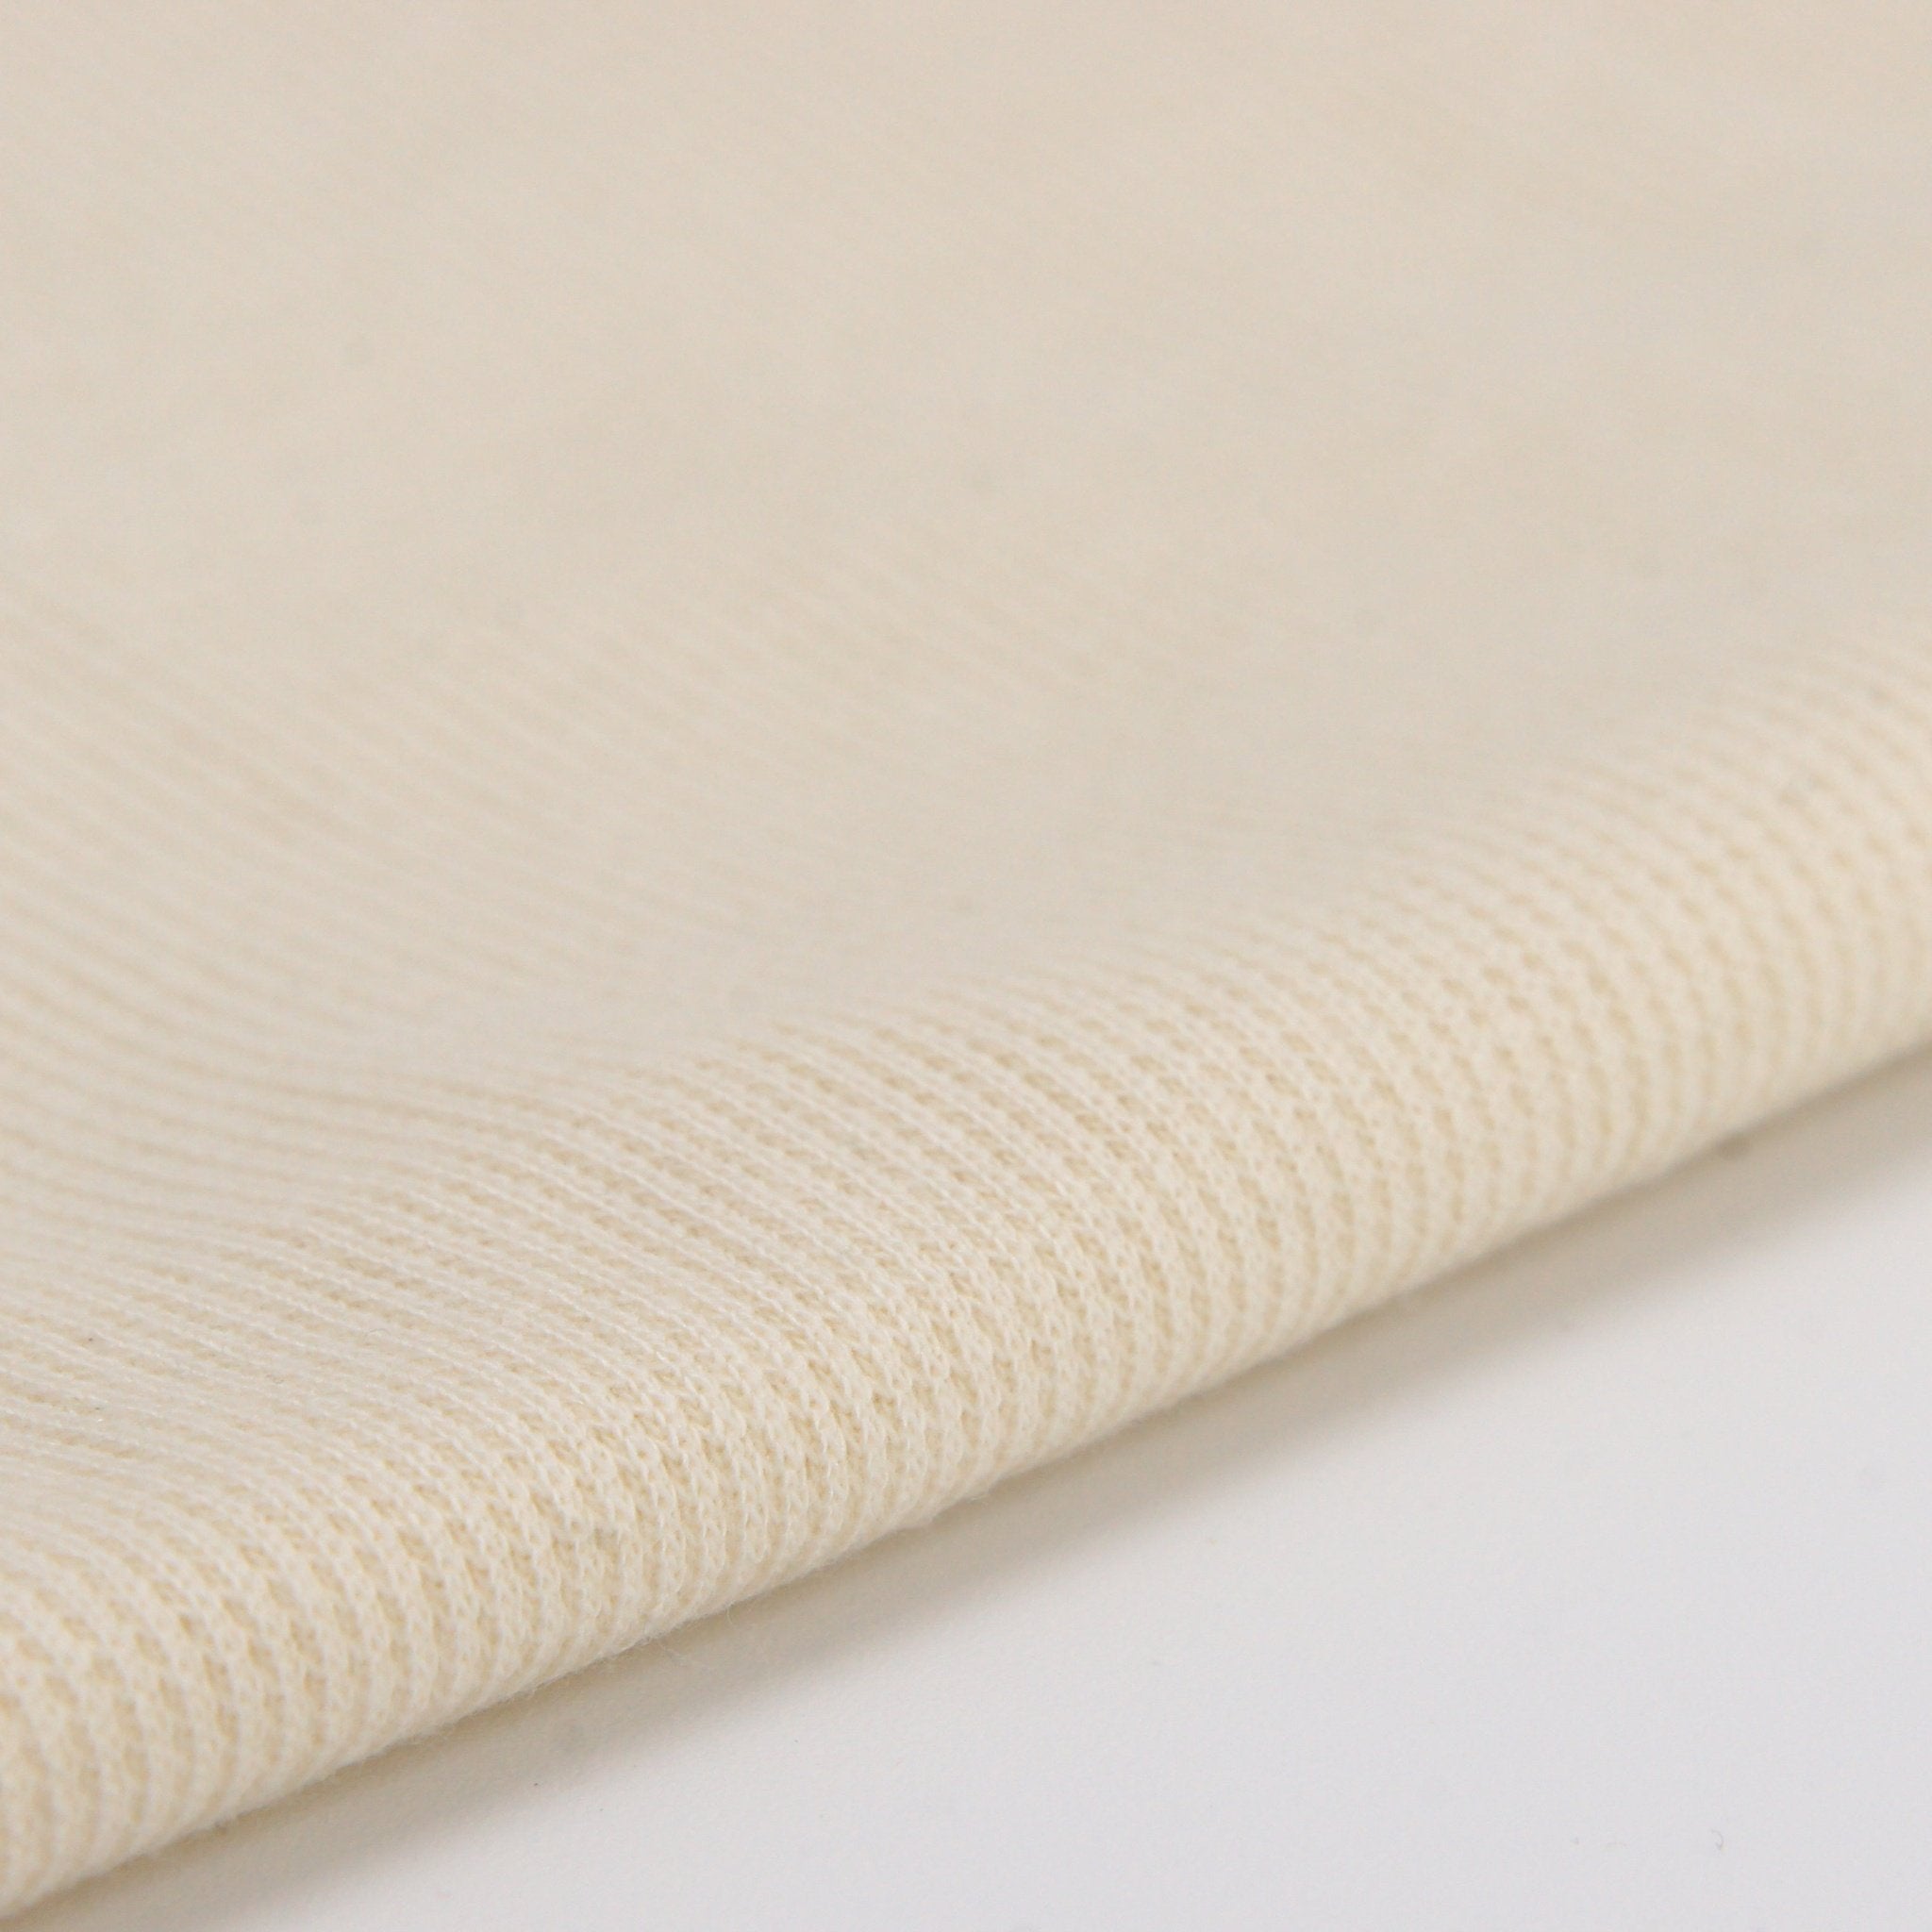 Tencel Organic Cotton Spandex 2x2 Rib Knit - Natural